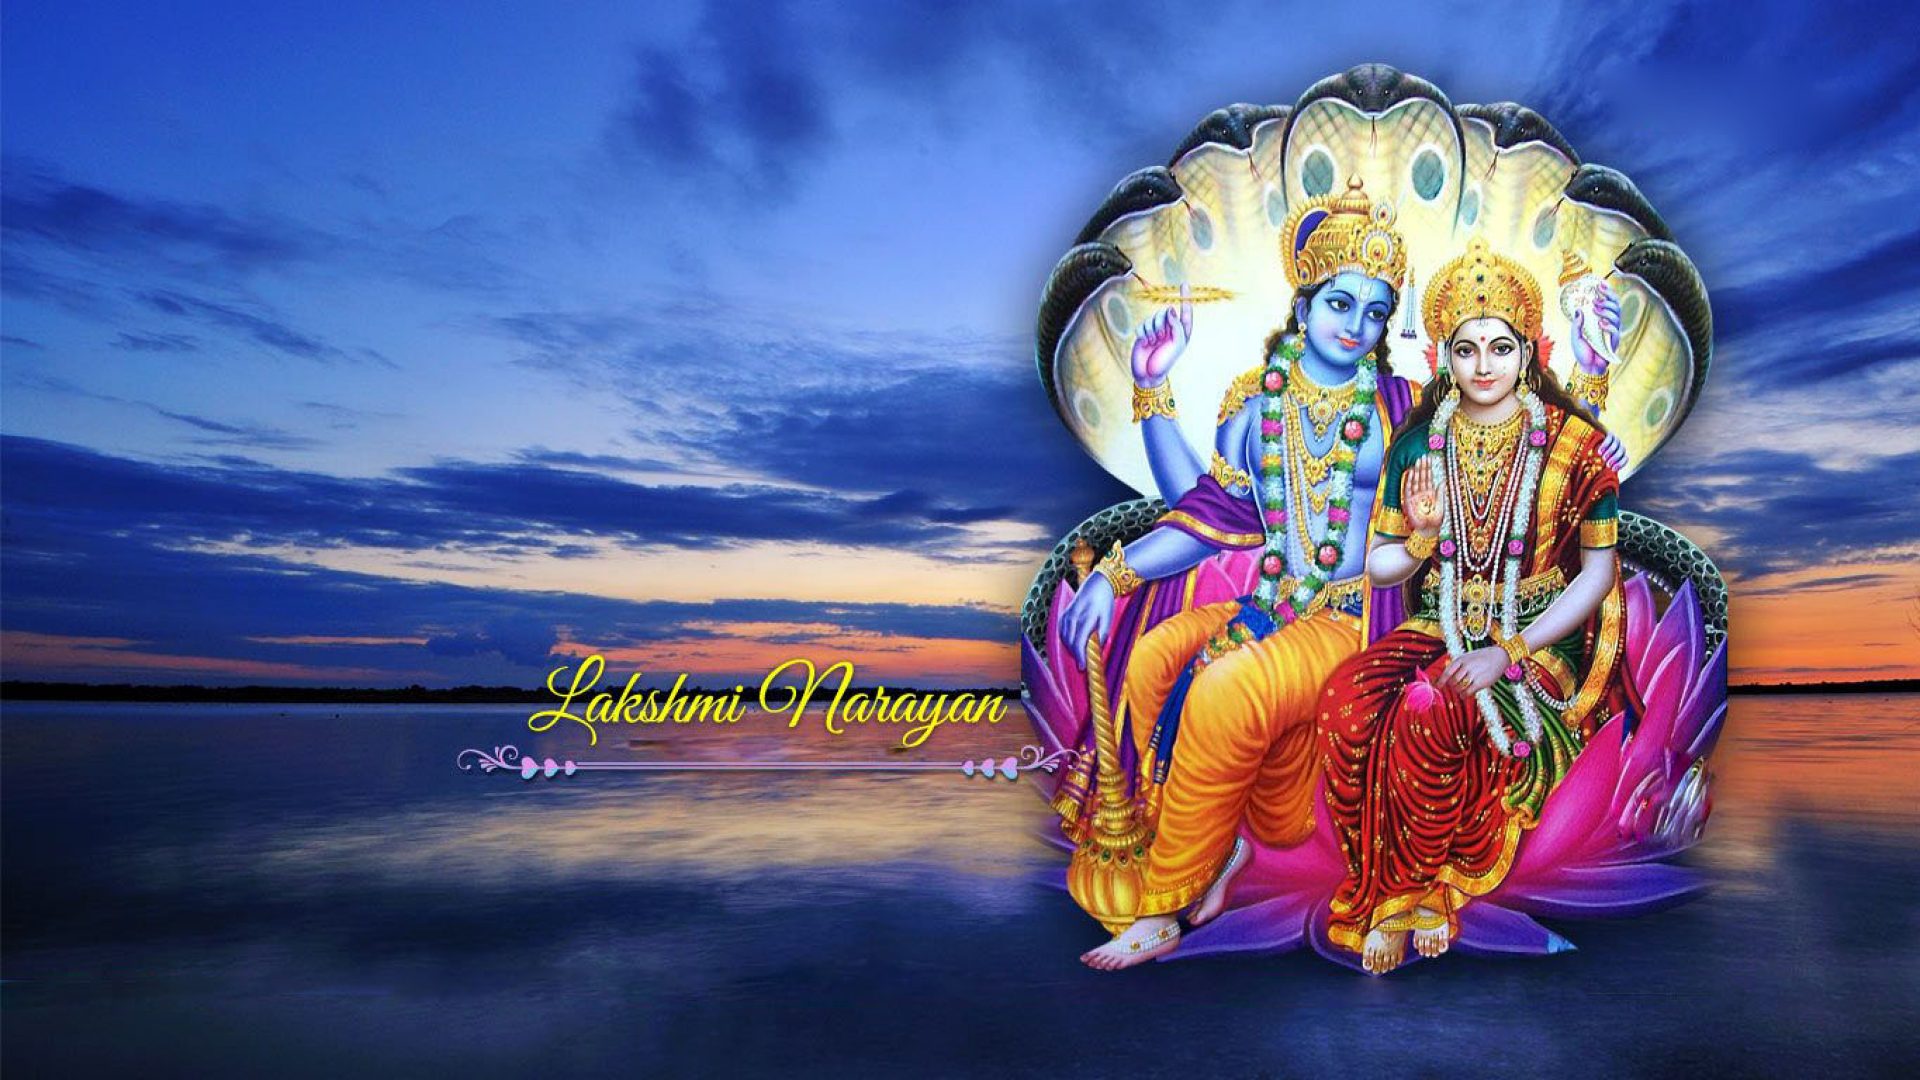 Vishnu Bhagwan Hd Images Download - God HD Wallpapers